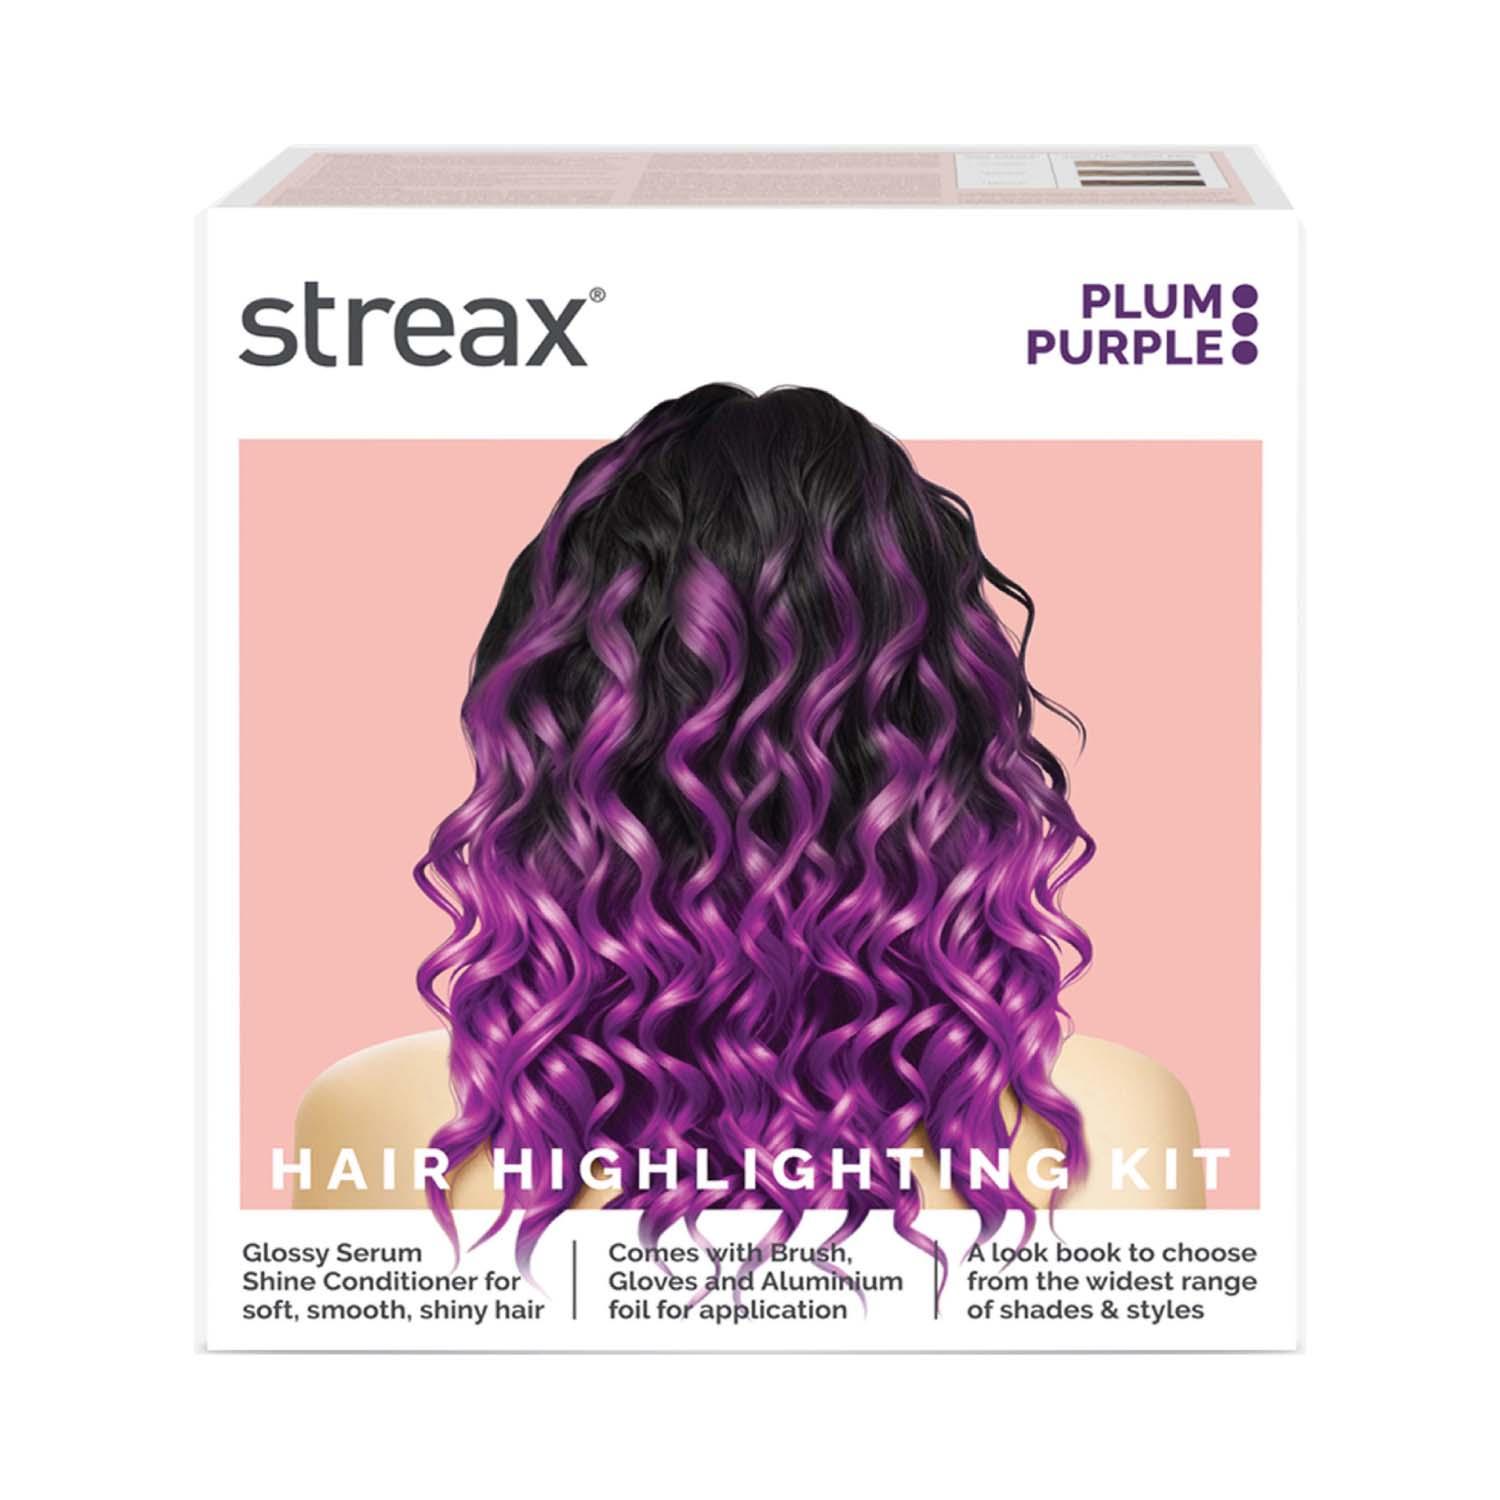 Streax Ultralights Hair Color Highlight Kit - Plum Purple (180 g)